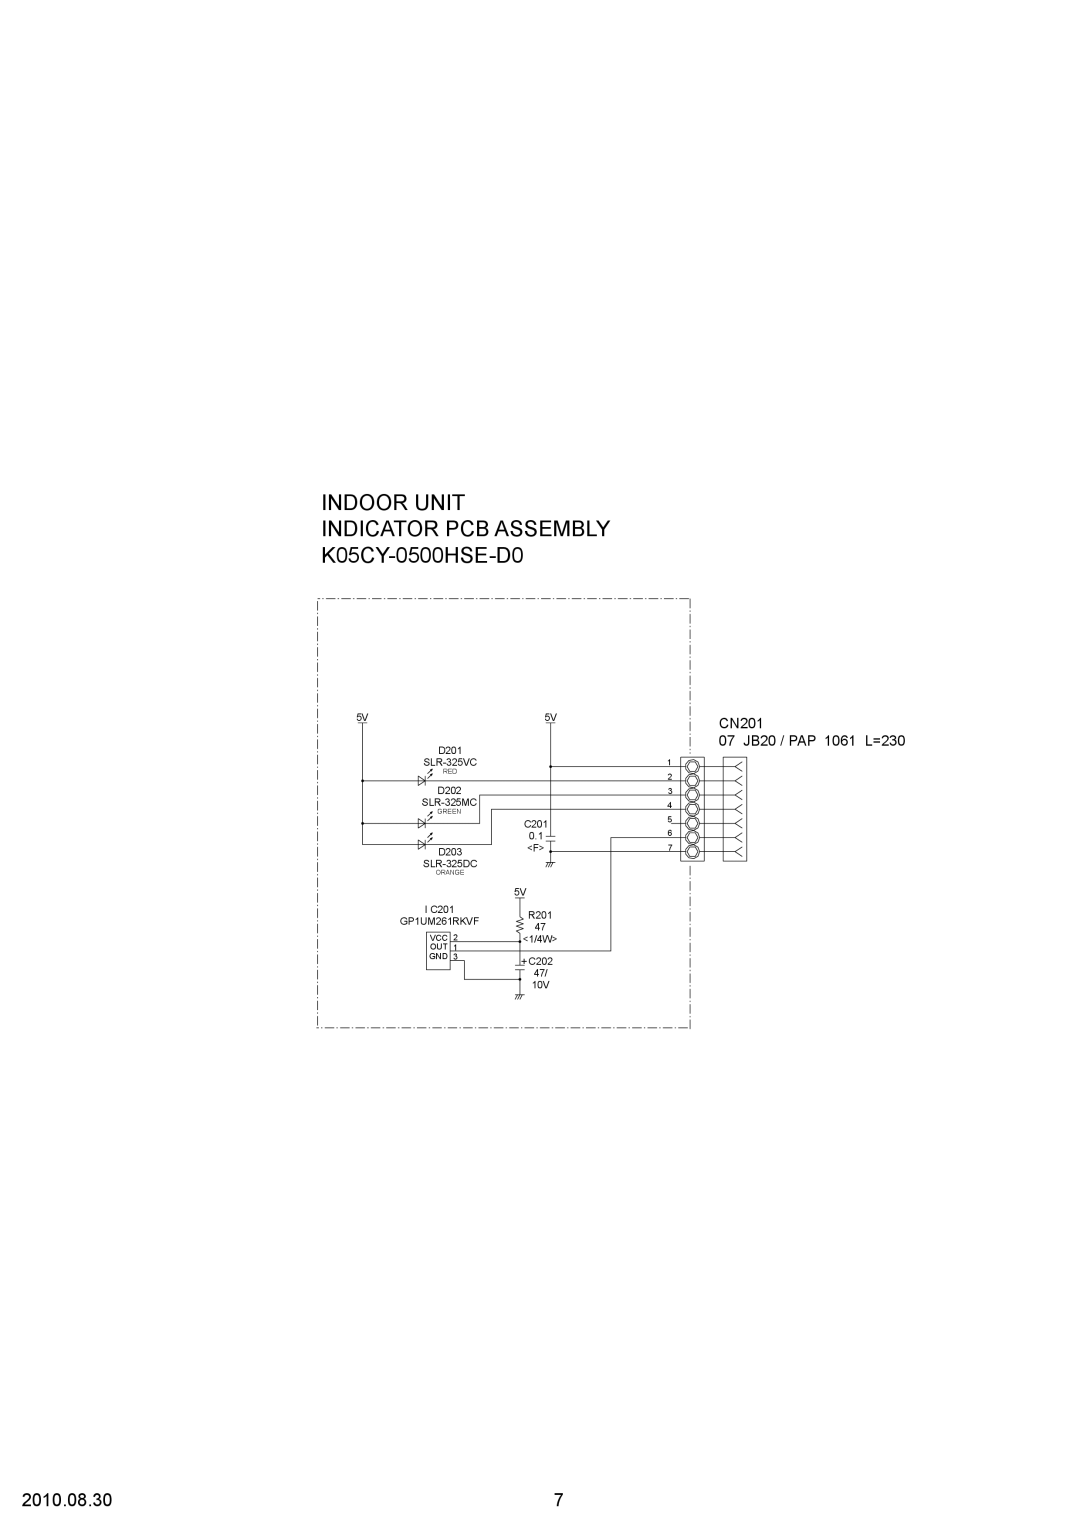 Friedrich MW24C3G, MR24C3G Indoor Unit Indicator Pcb Assembly, K05CY-0500HSE-D0, CN201, 07 JB20 / PAP 1061 L=230 